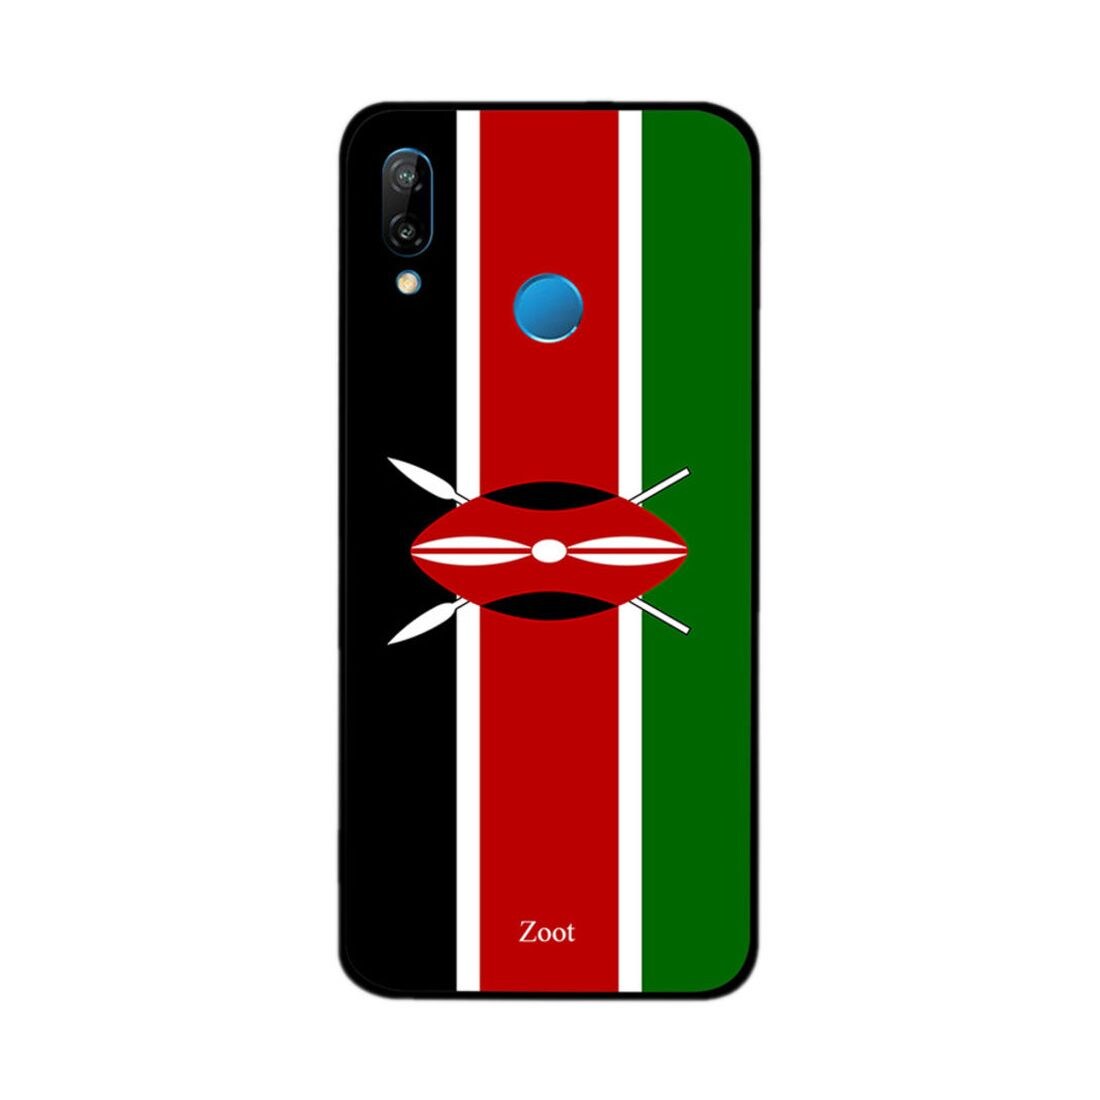 Thermoplastic Polyurethane Protective Case Cover For Huawei Nova 3e Kenya Flag